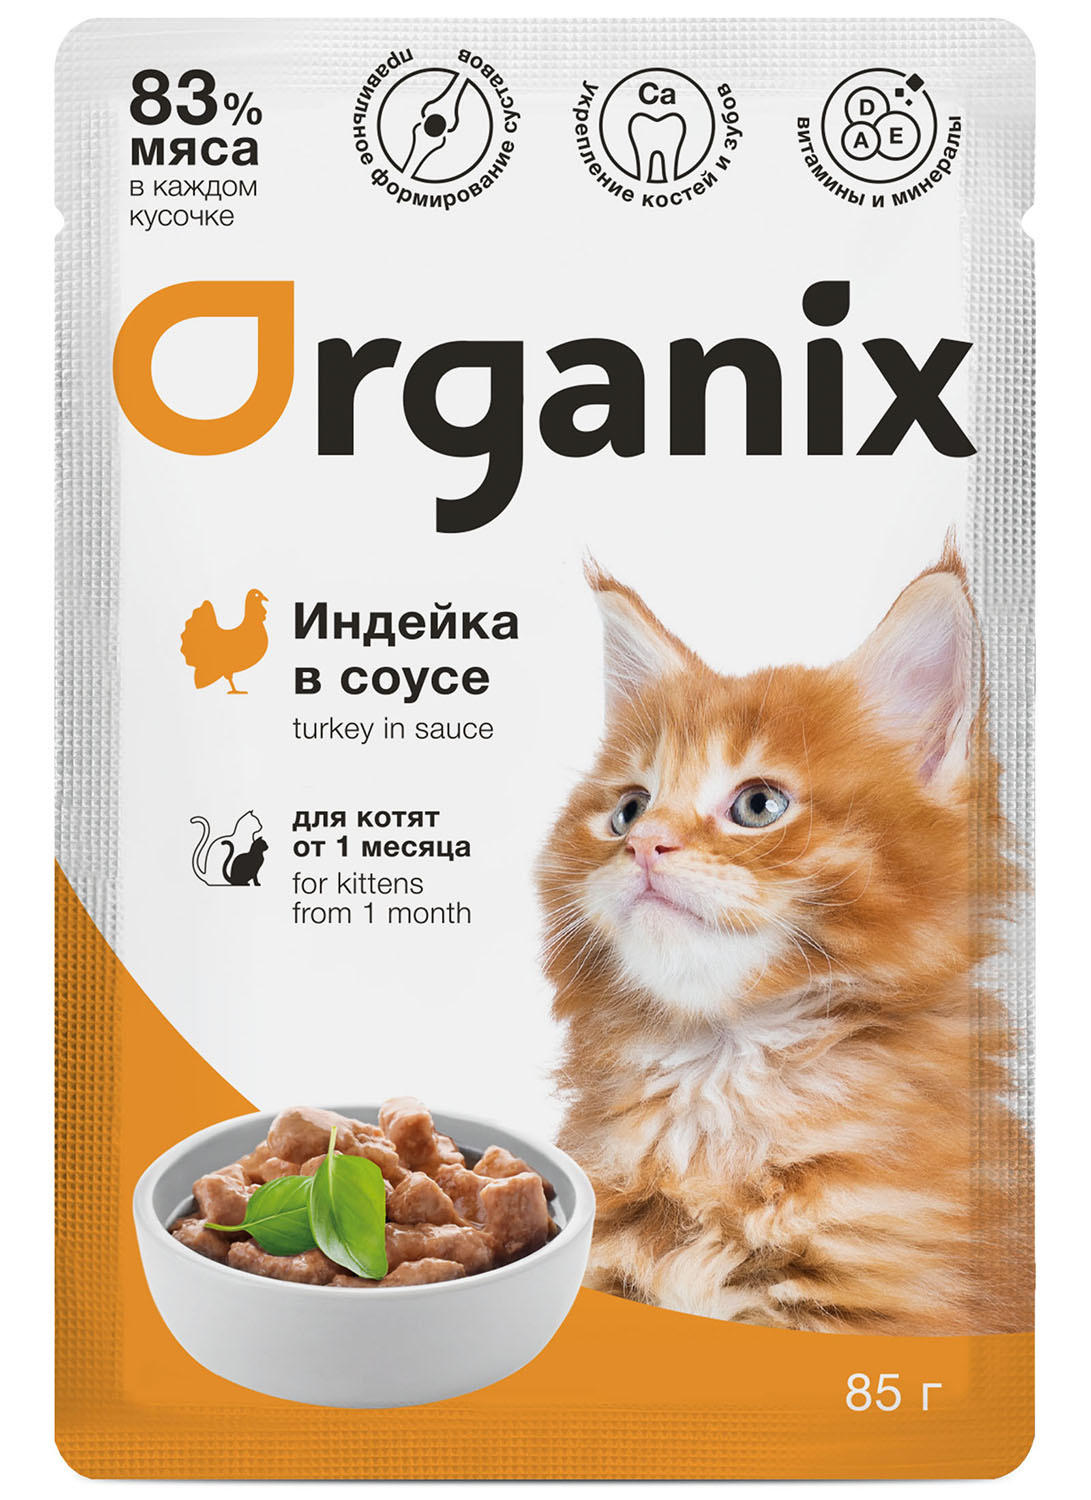 Organix паучи Organix паучи для котят индейка в соусе (85 г) organix паучи organix паучи упаковка 25 шт паучи для котят индейка в соусе 2 13 кг